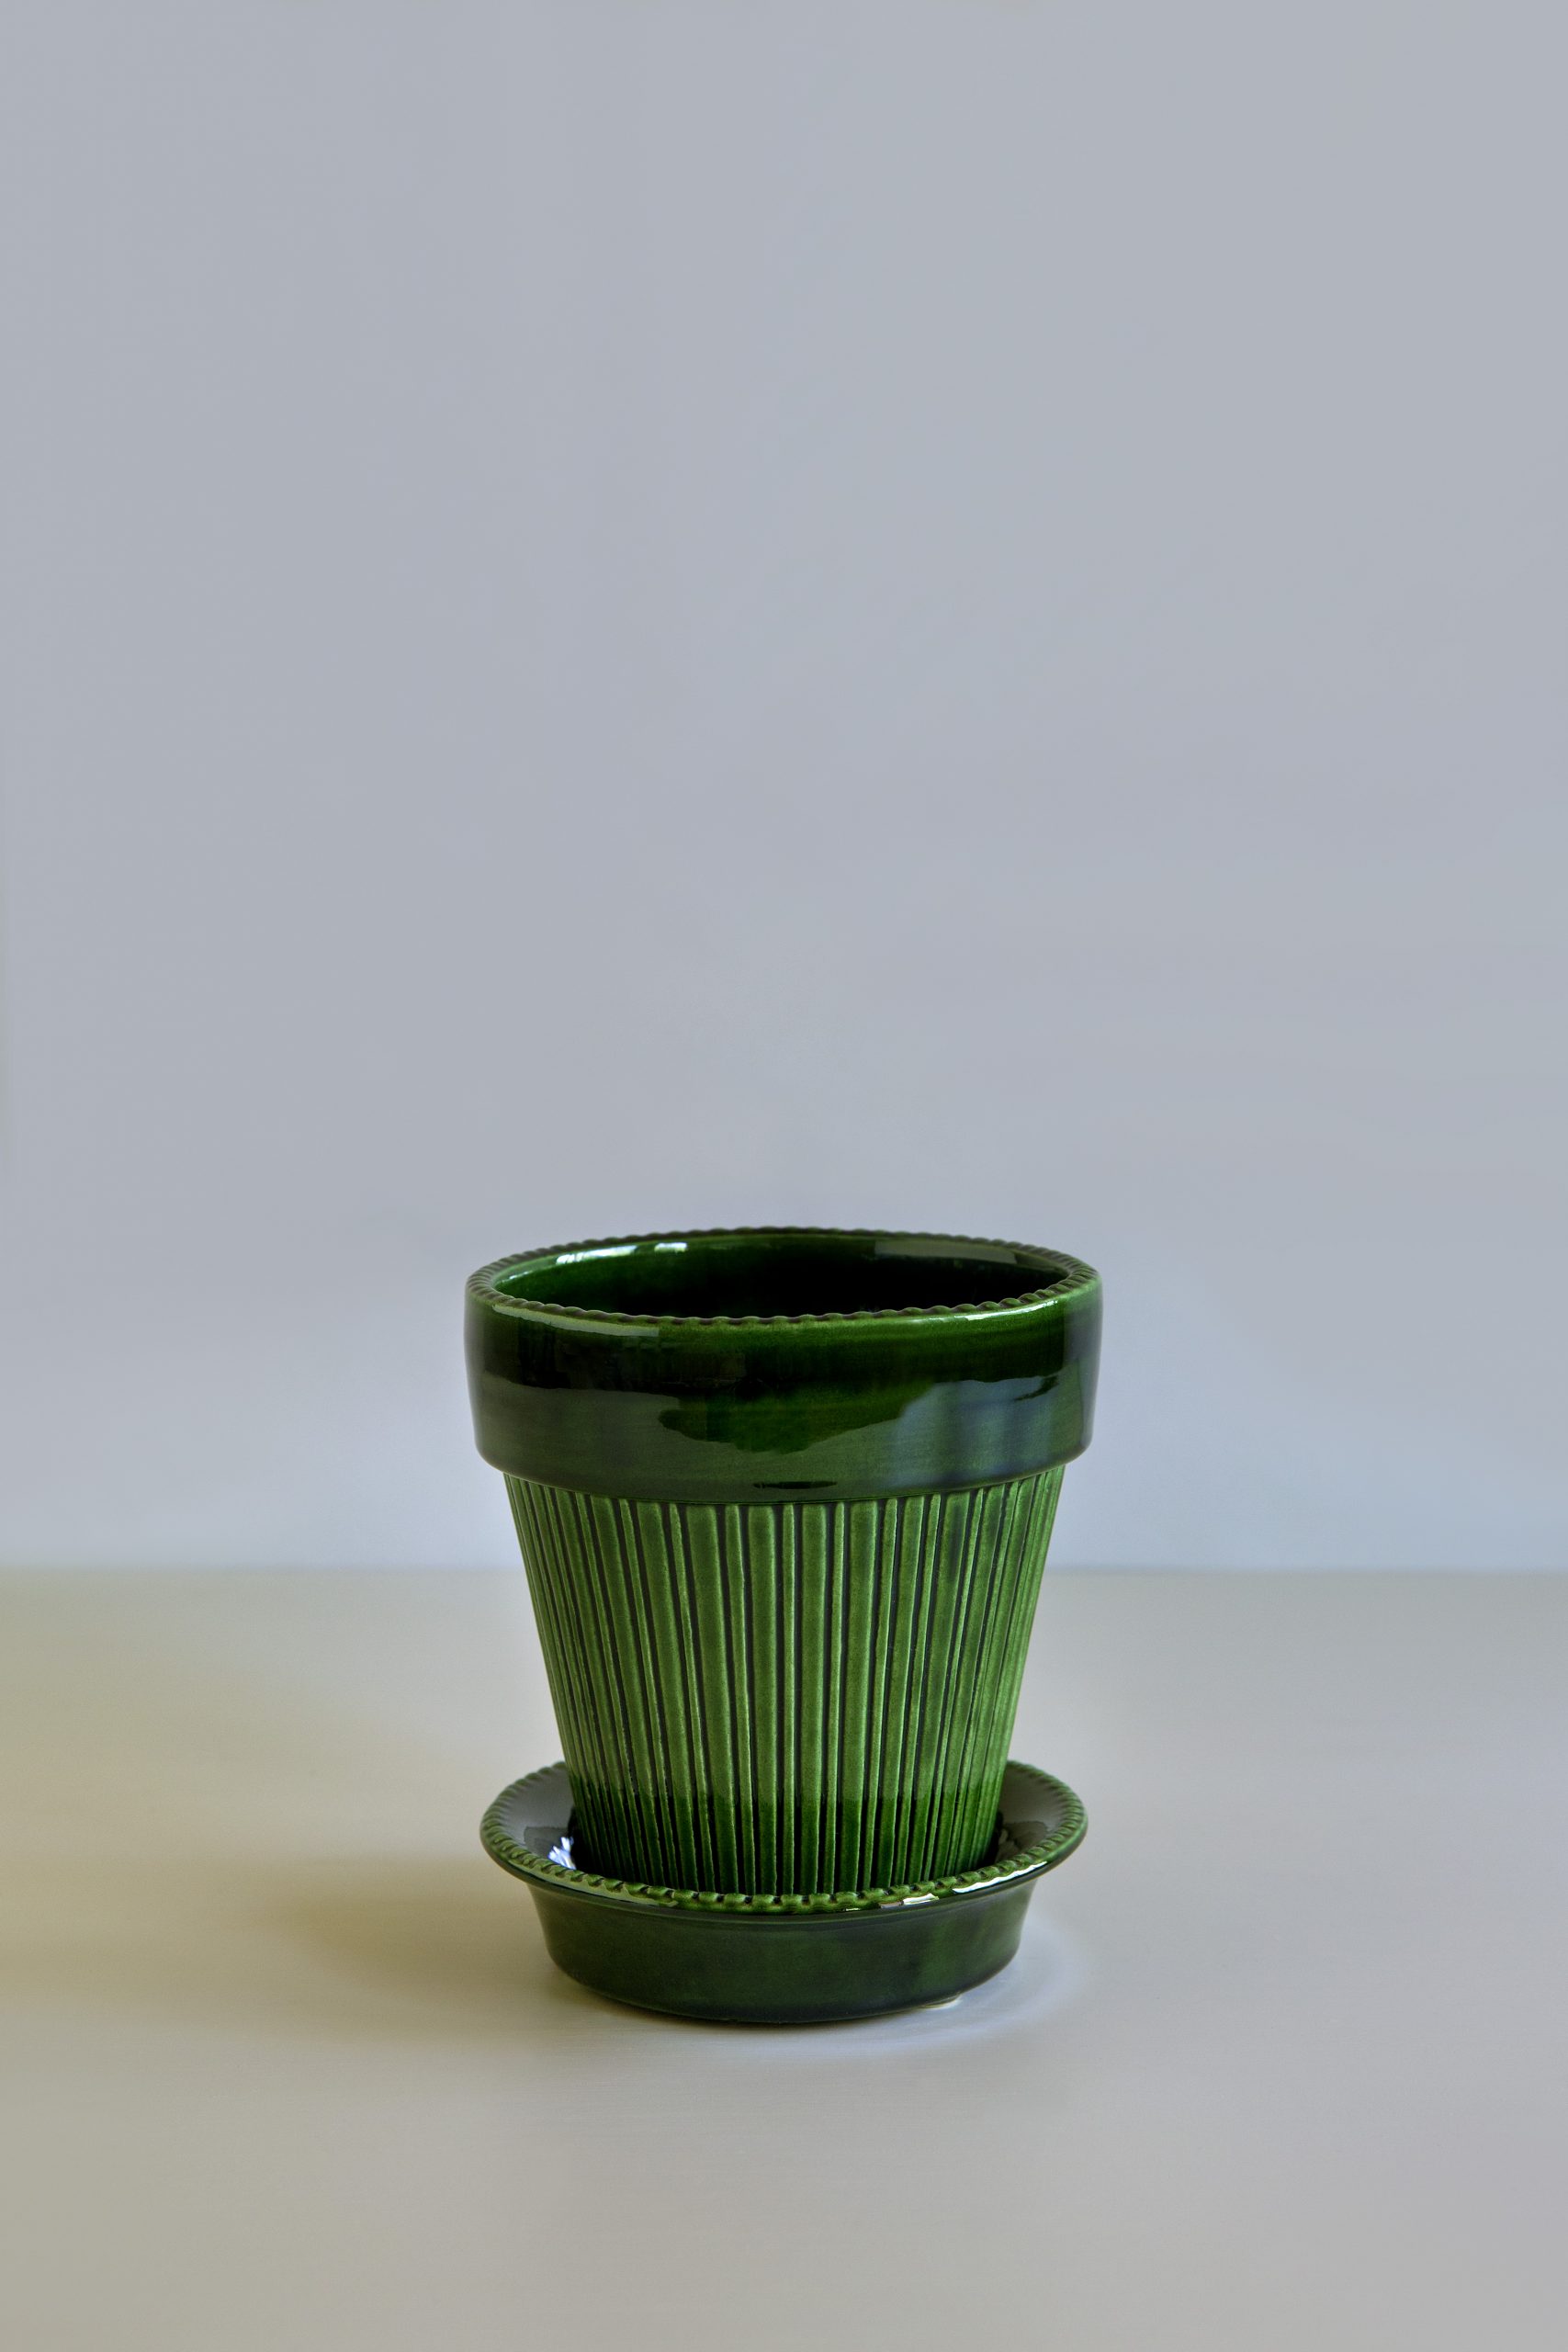 Glazed emerald green pot with saucer.